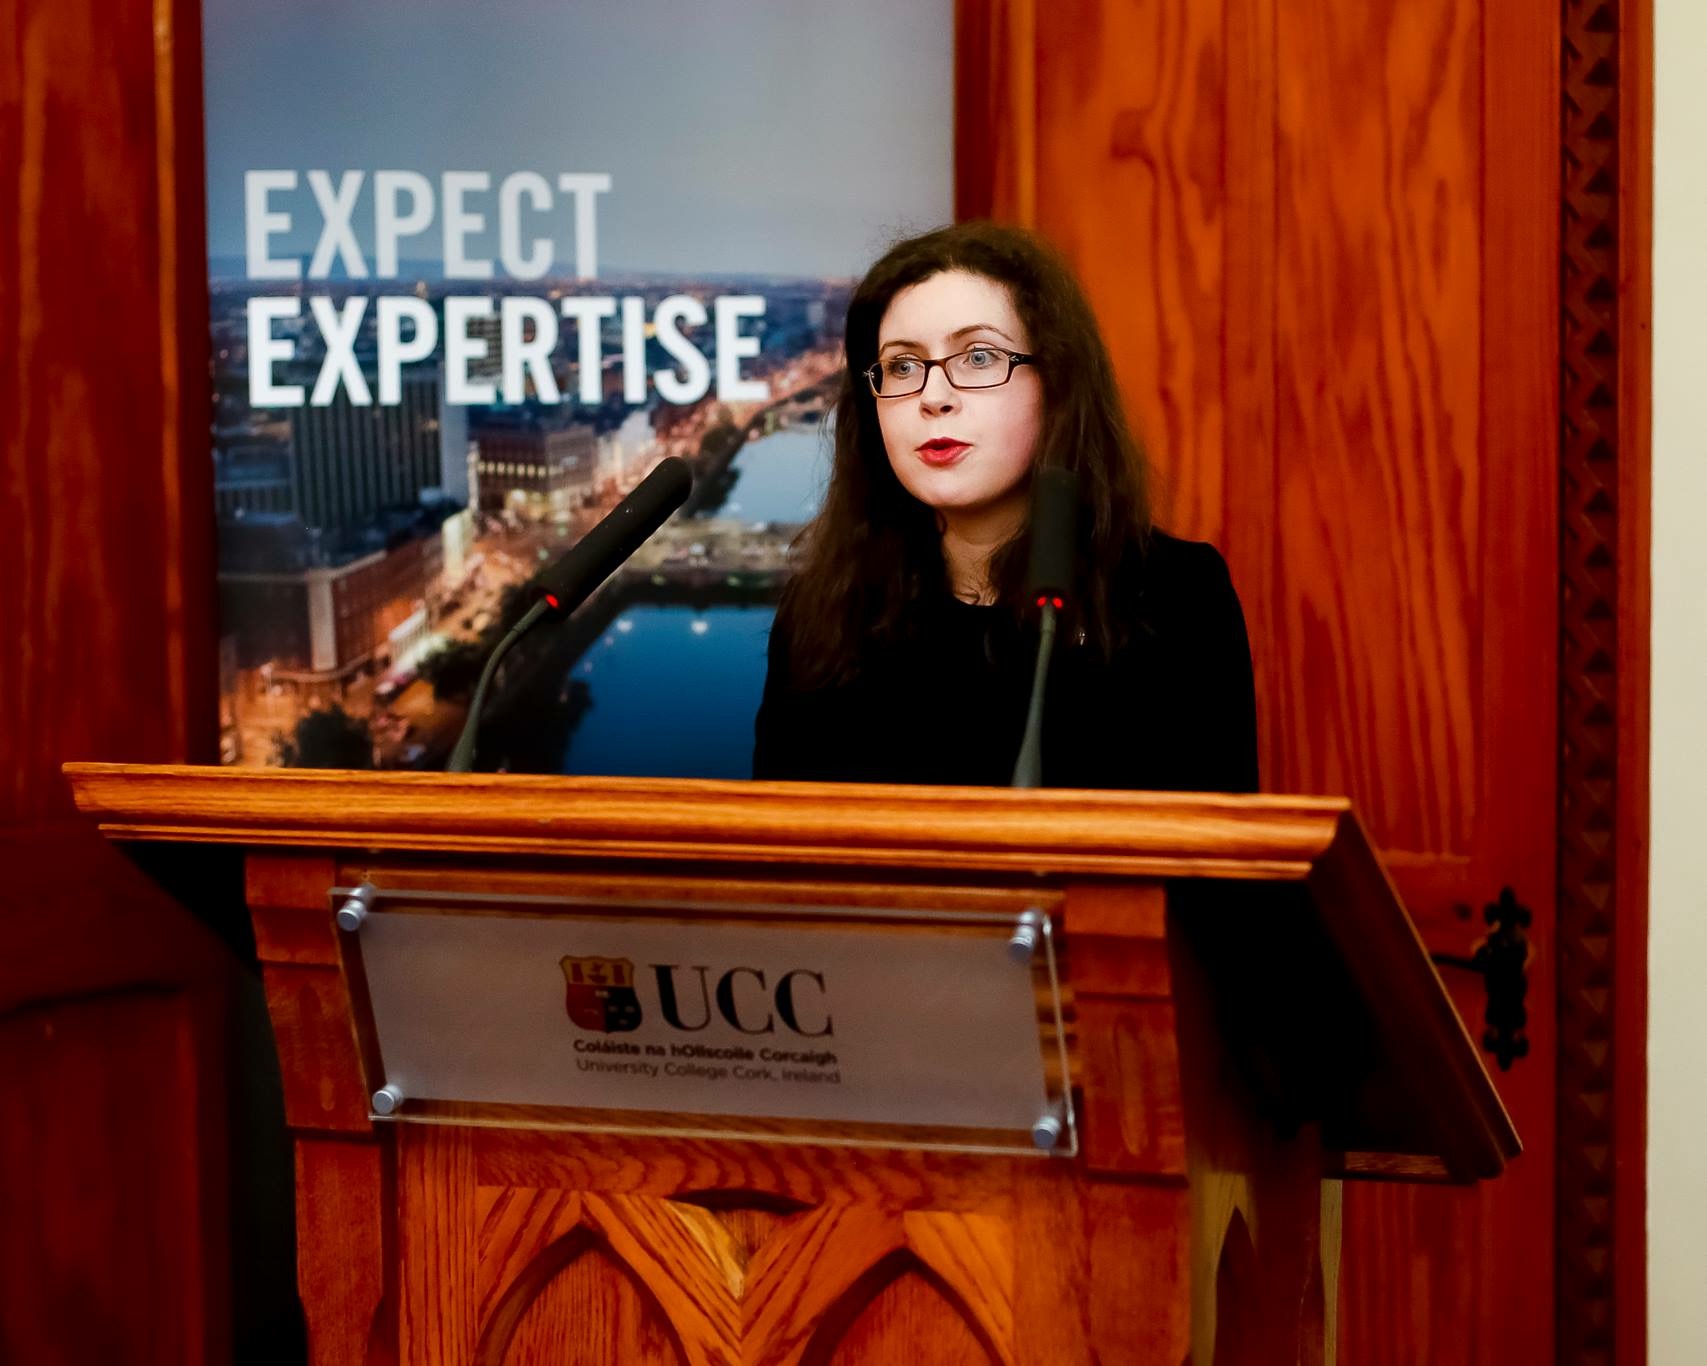 Alumni Spotlight: Clara Hurley - Quercus Scholar and Graduate of Oxford's Prestigious BCL Programme